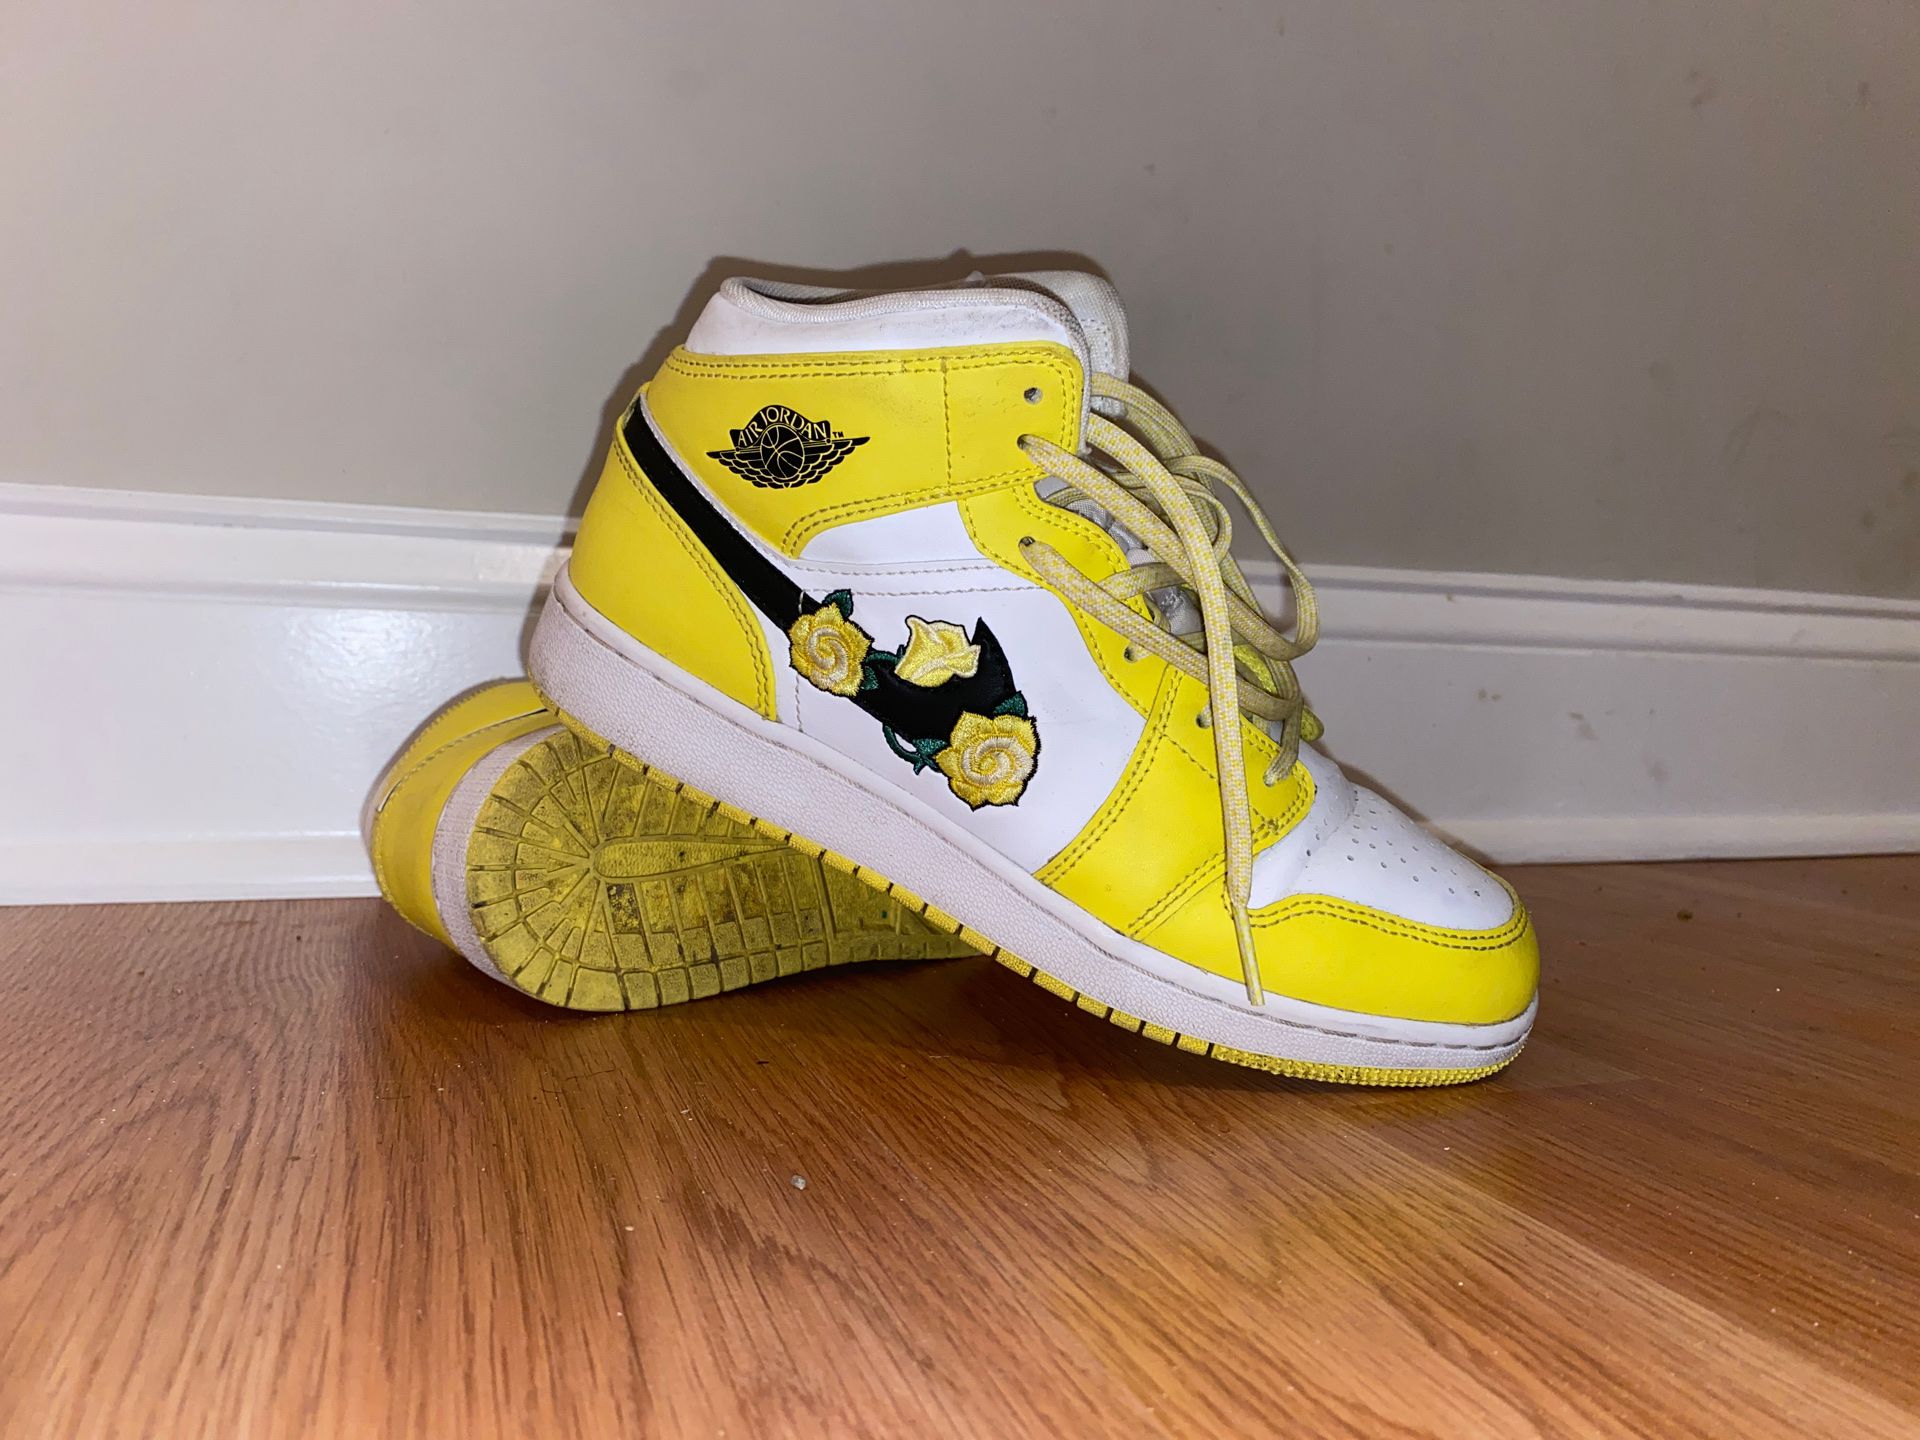 Yellow Jordan 1s